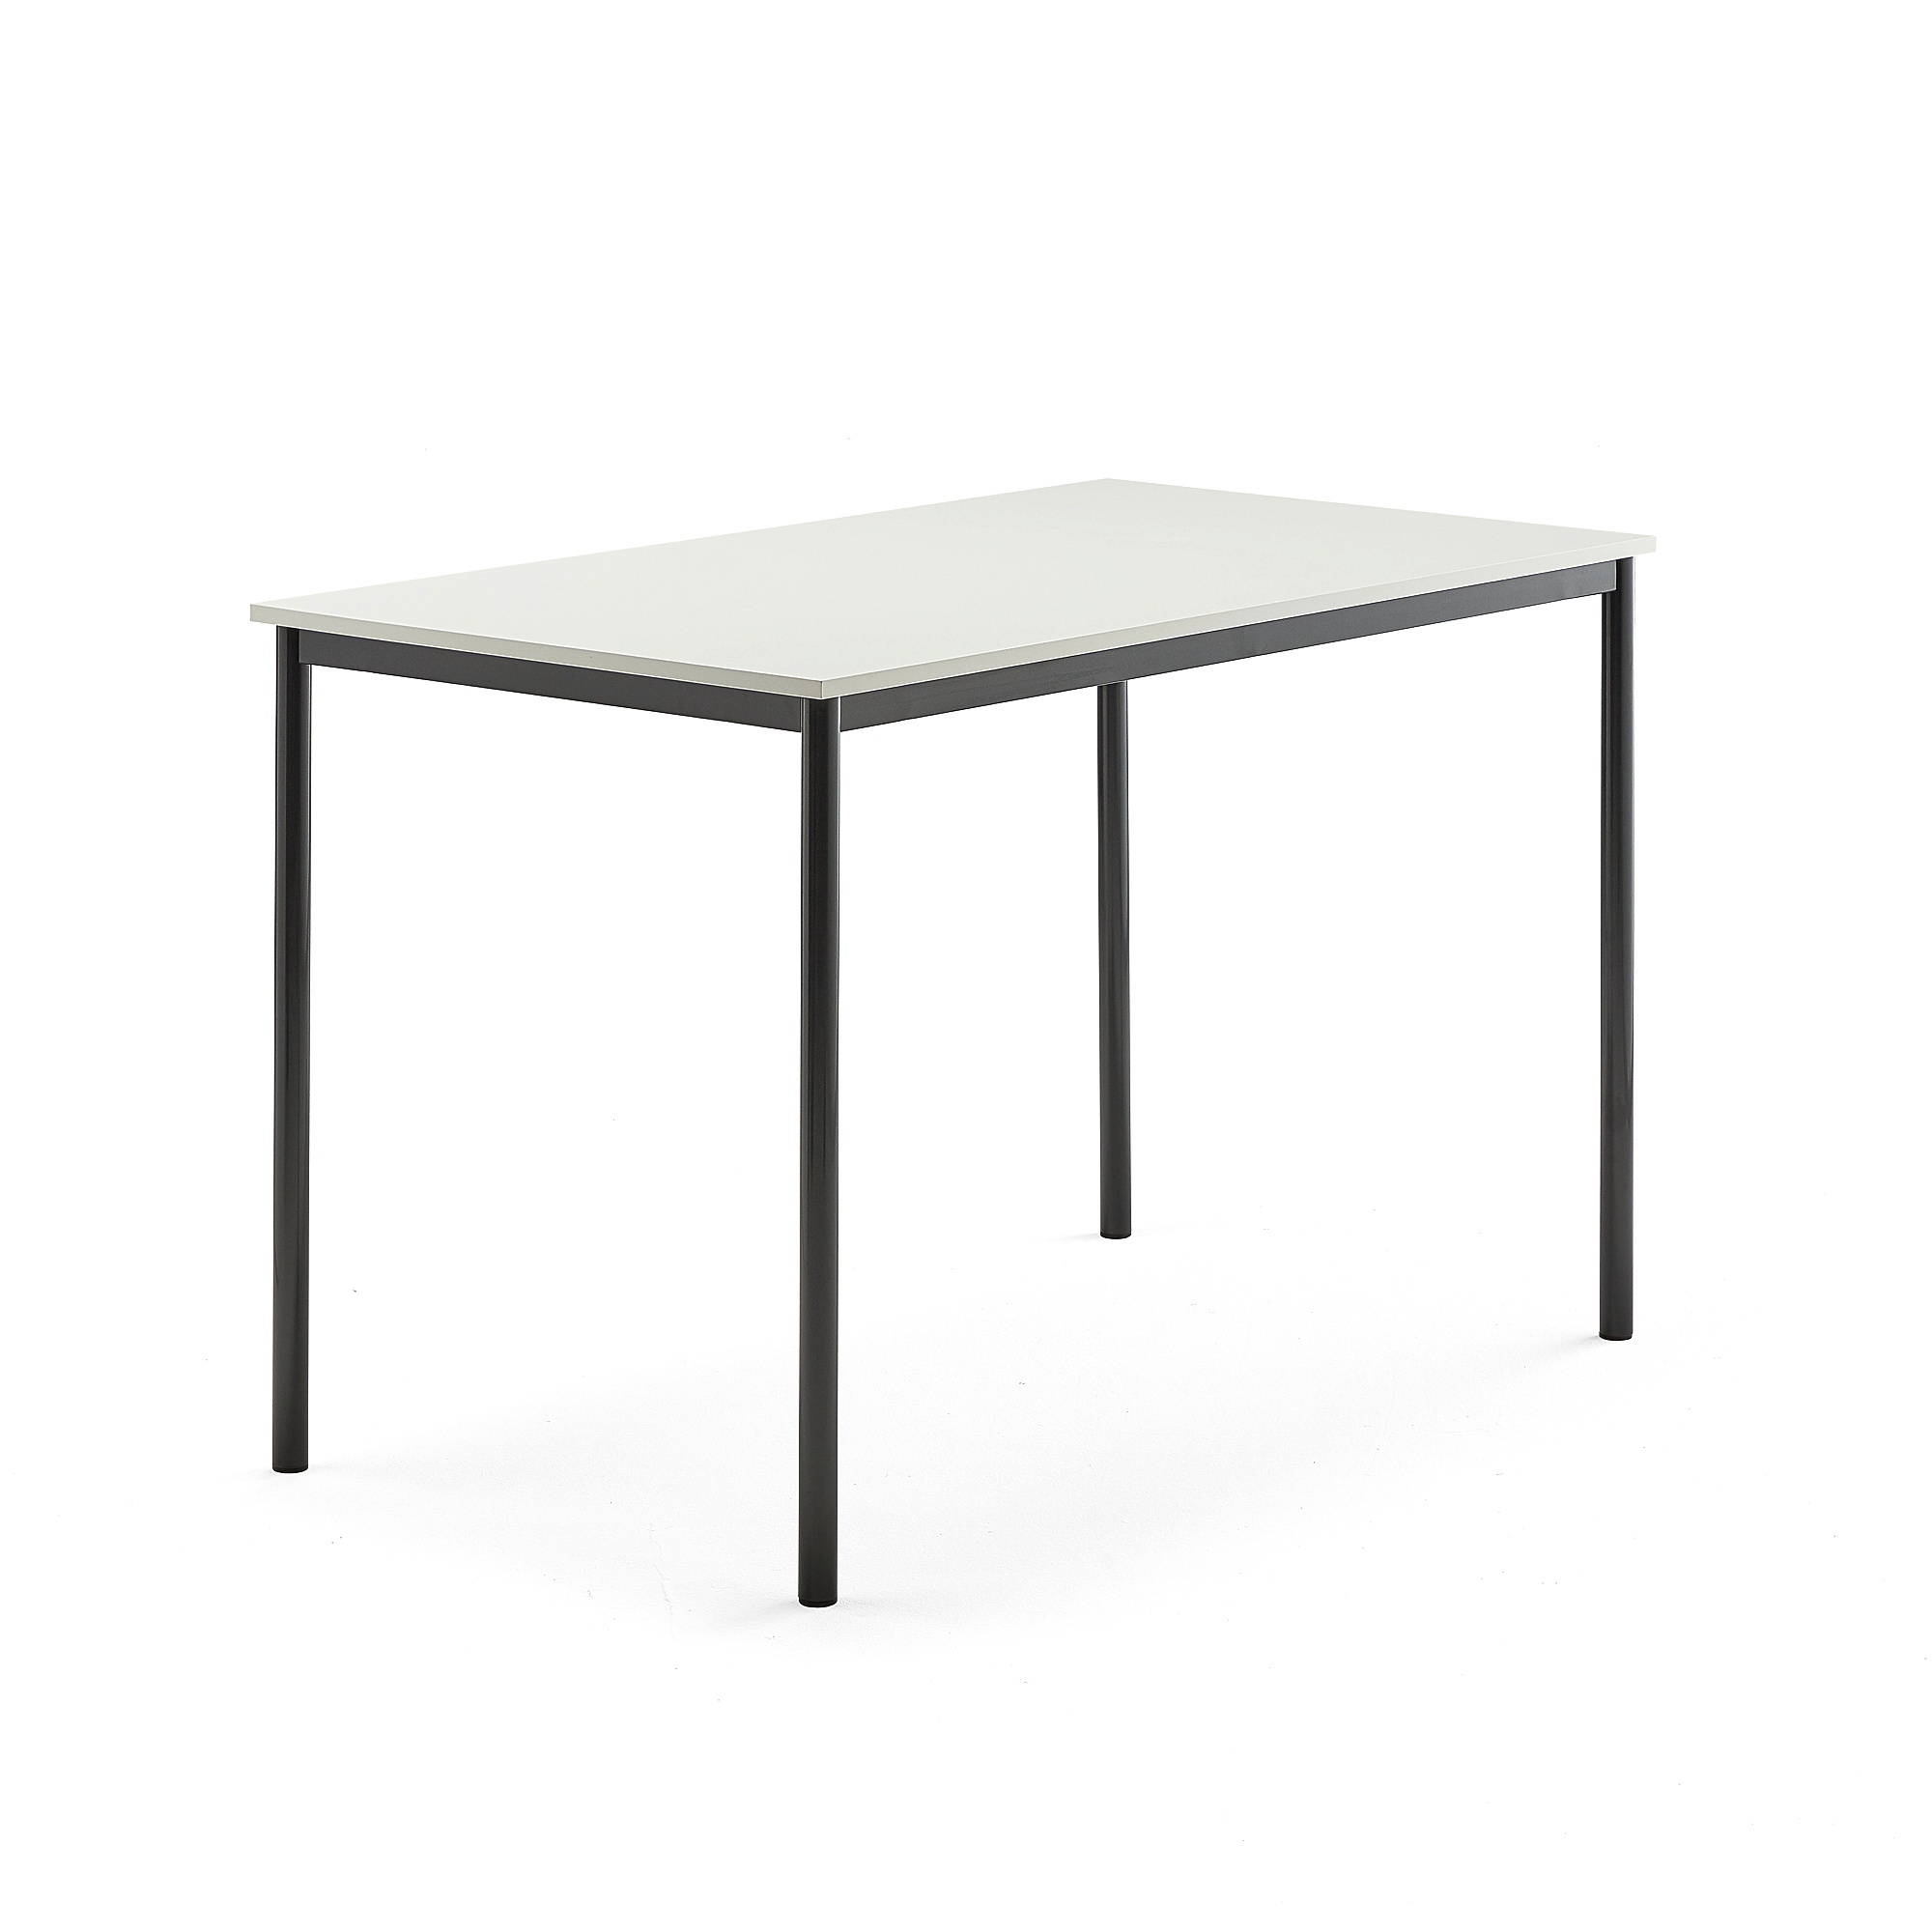 Stůl BORÅS, 1400x800x900 mm, antracitově šedé nohy, HPL deska, bílá